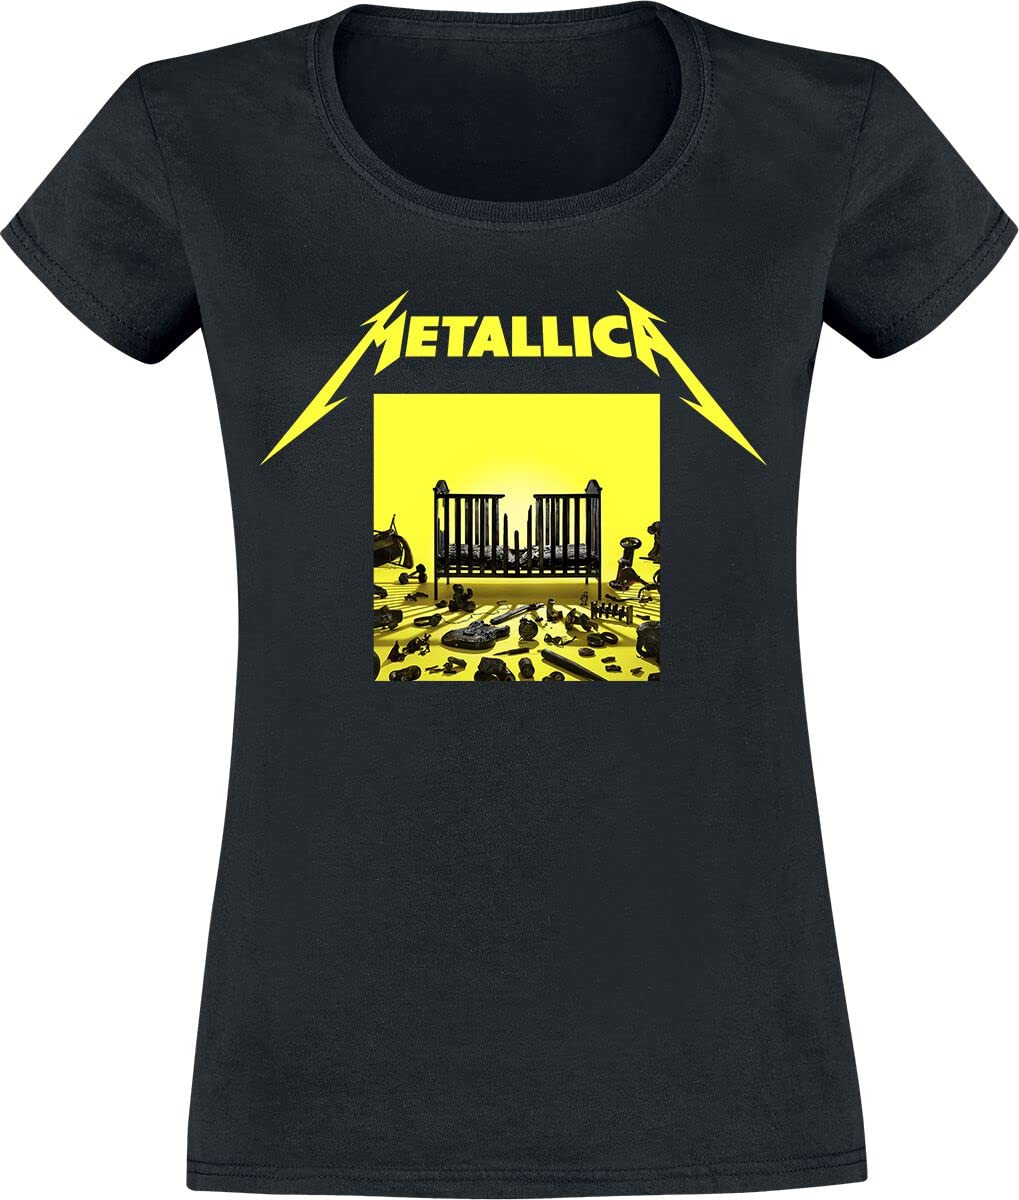 Metallica M72 Squared Cover Frauen T-Shirt schwarz S 100% Baumwolle Band-Merch, Bands